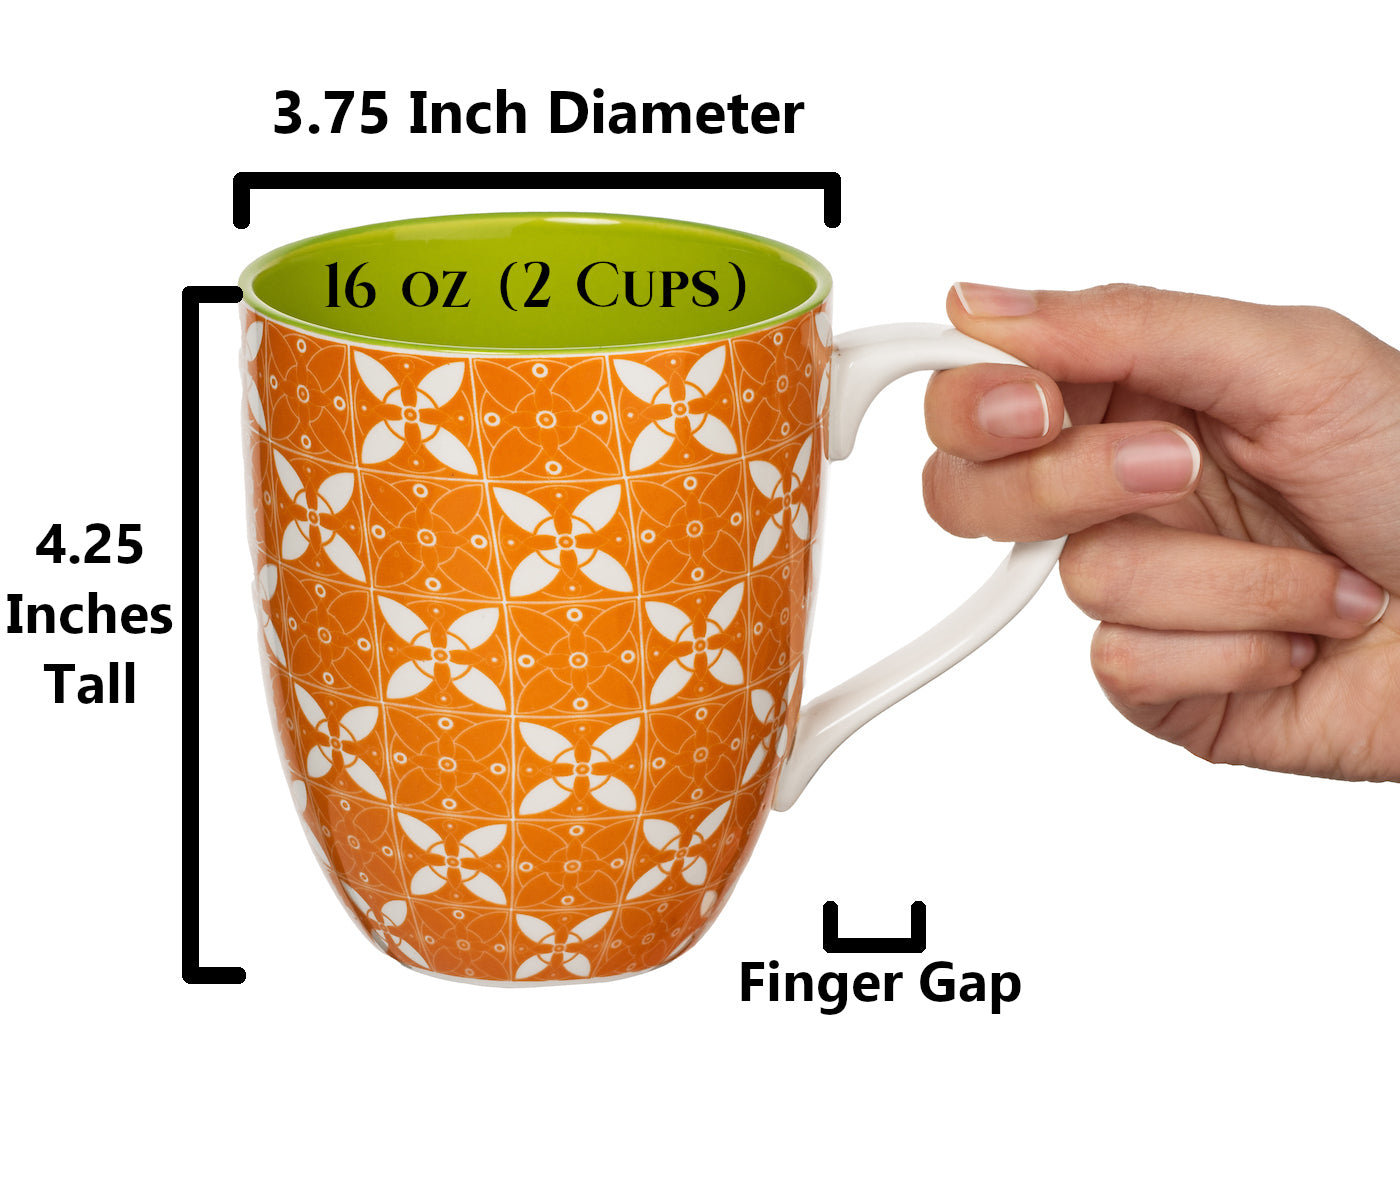 Coffee Mugs, 16 oz, Set of 2